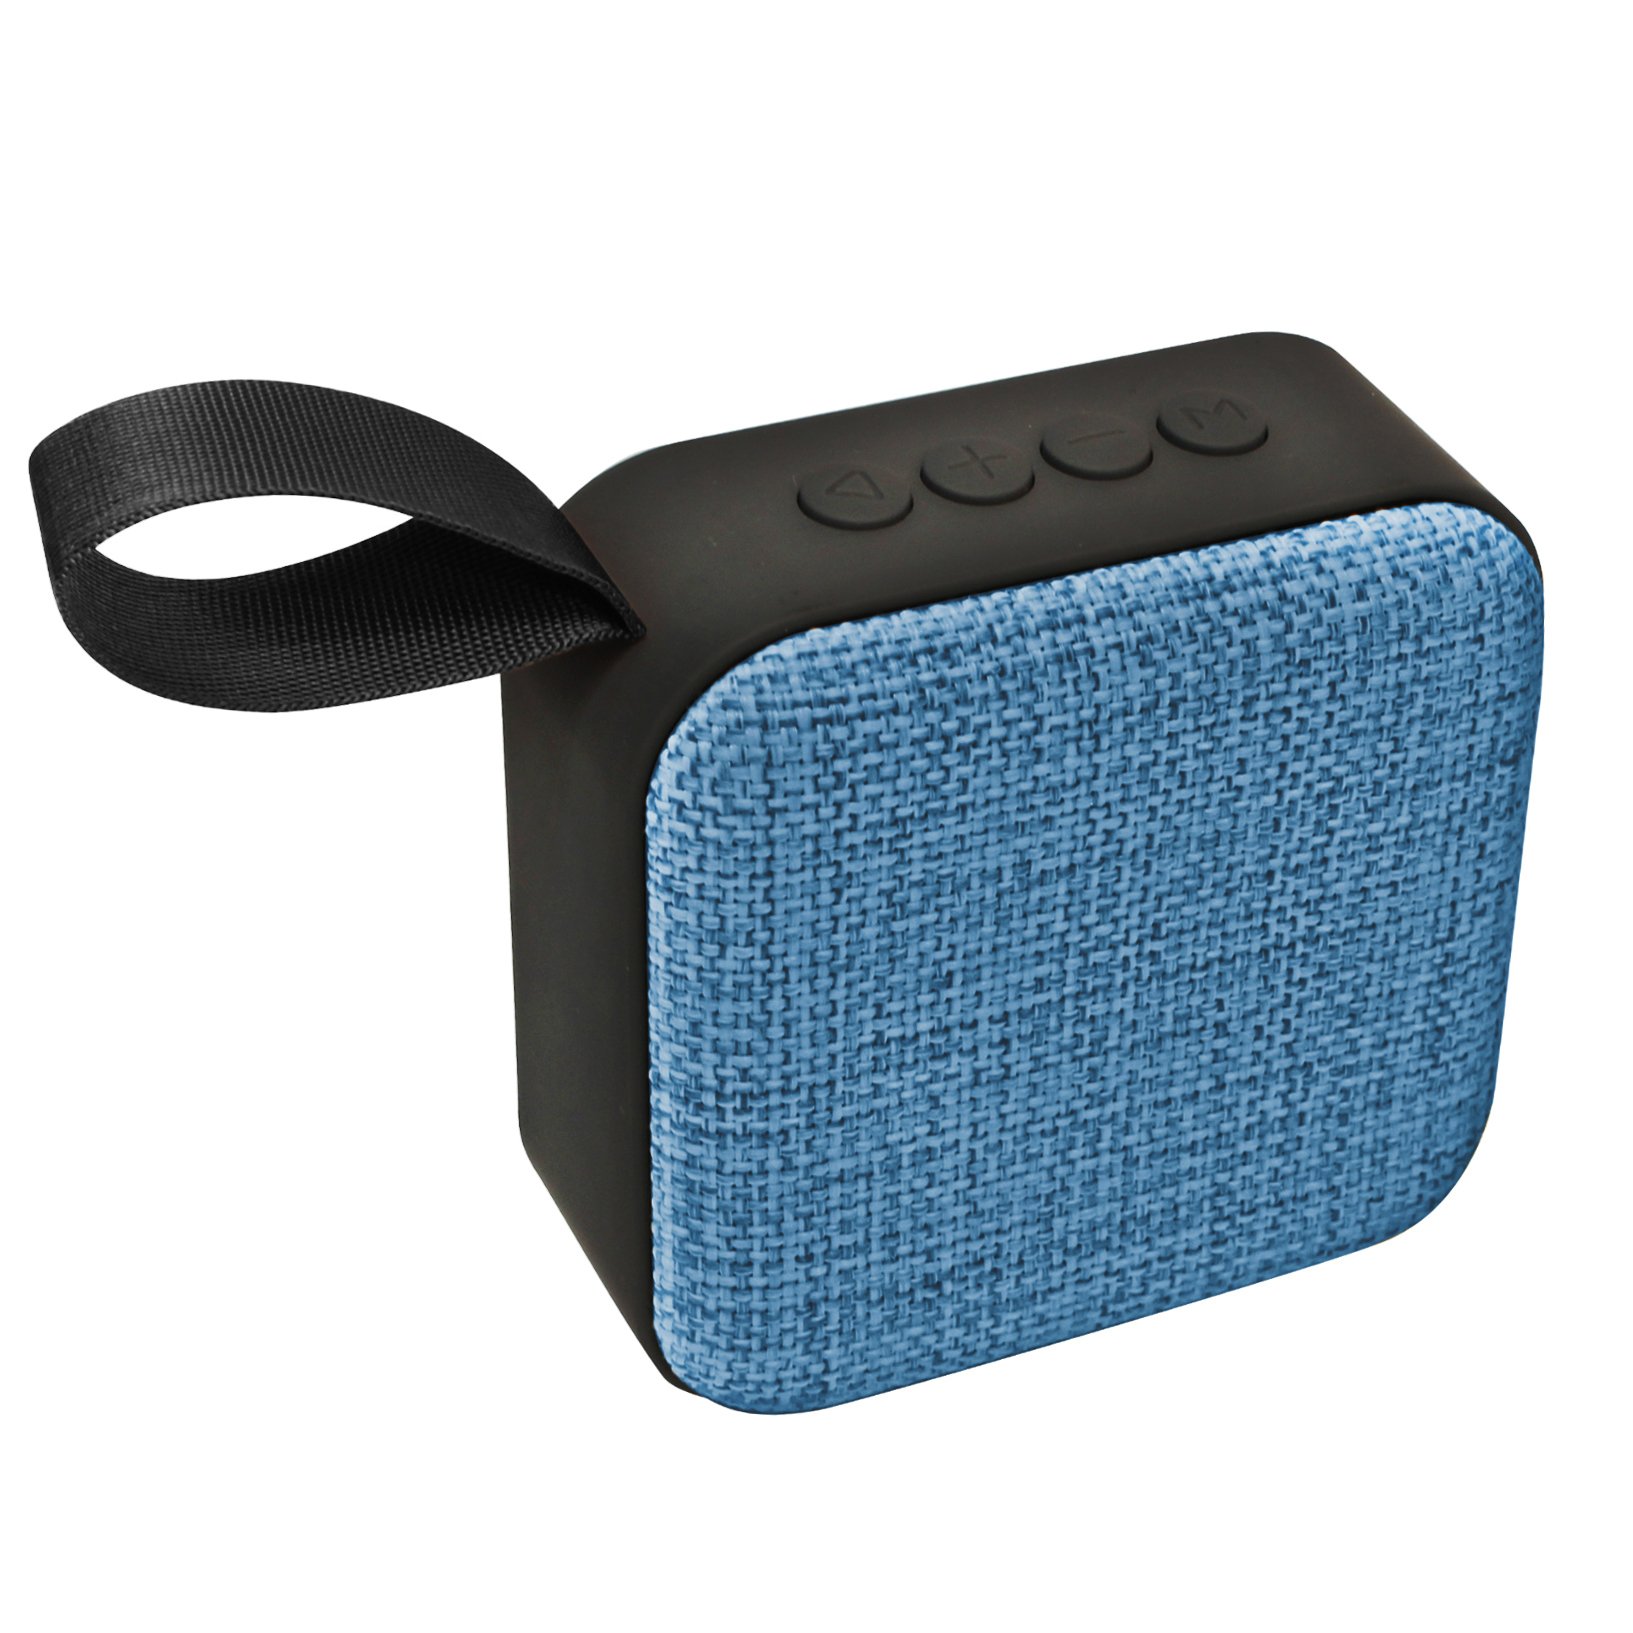 Wholesale Loud Sound Portable Beach Handbag Bluetooth Speaker ATS